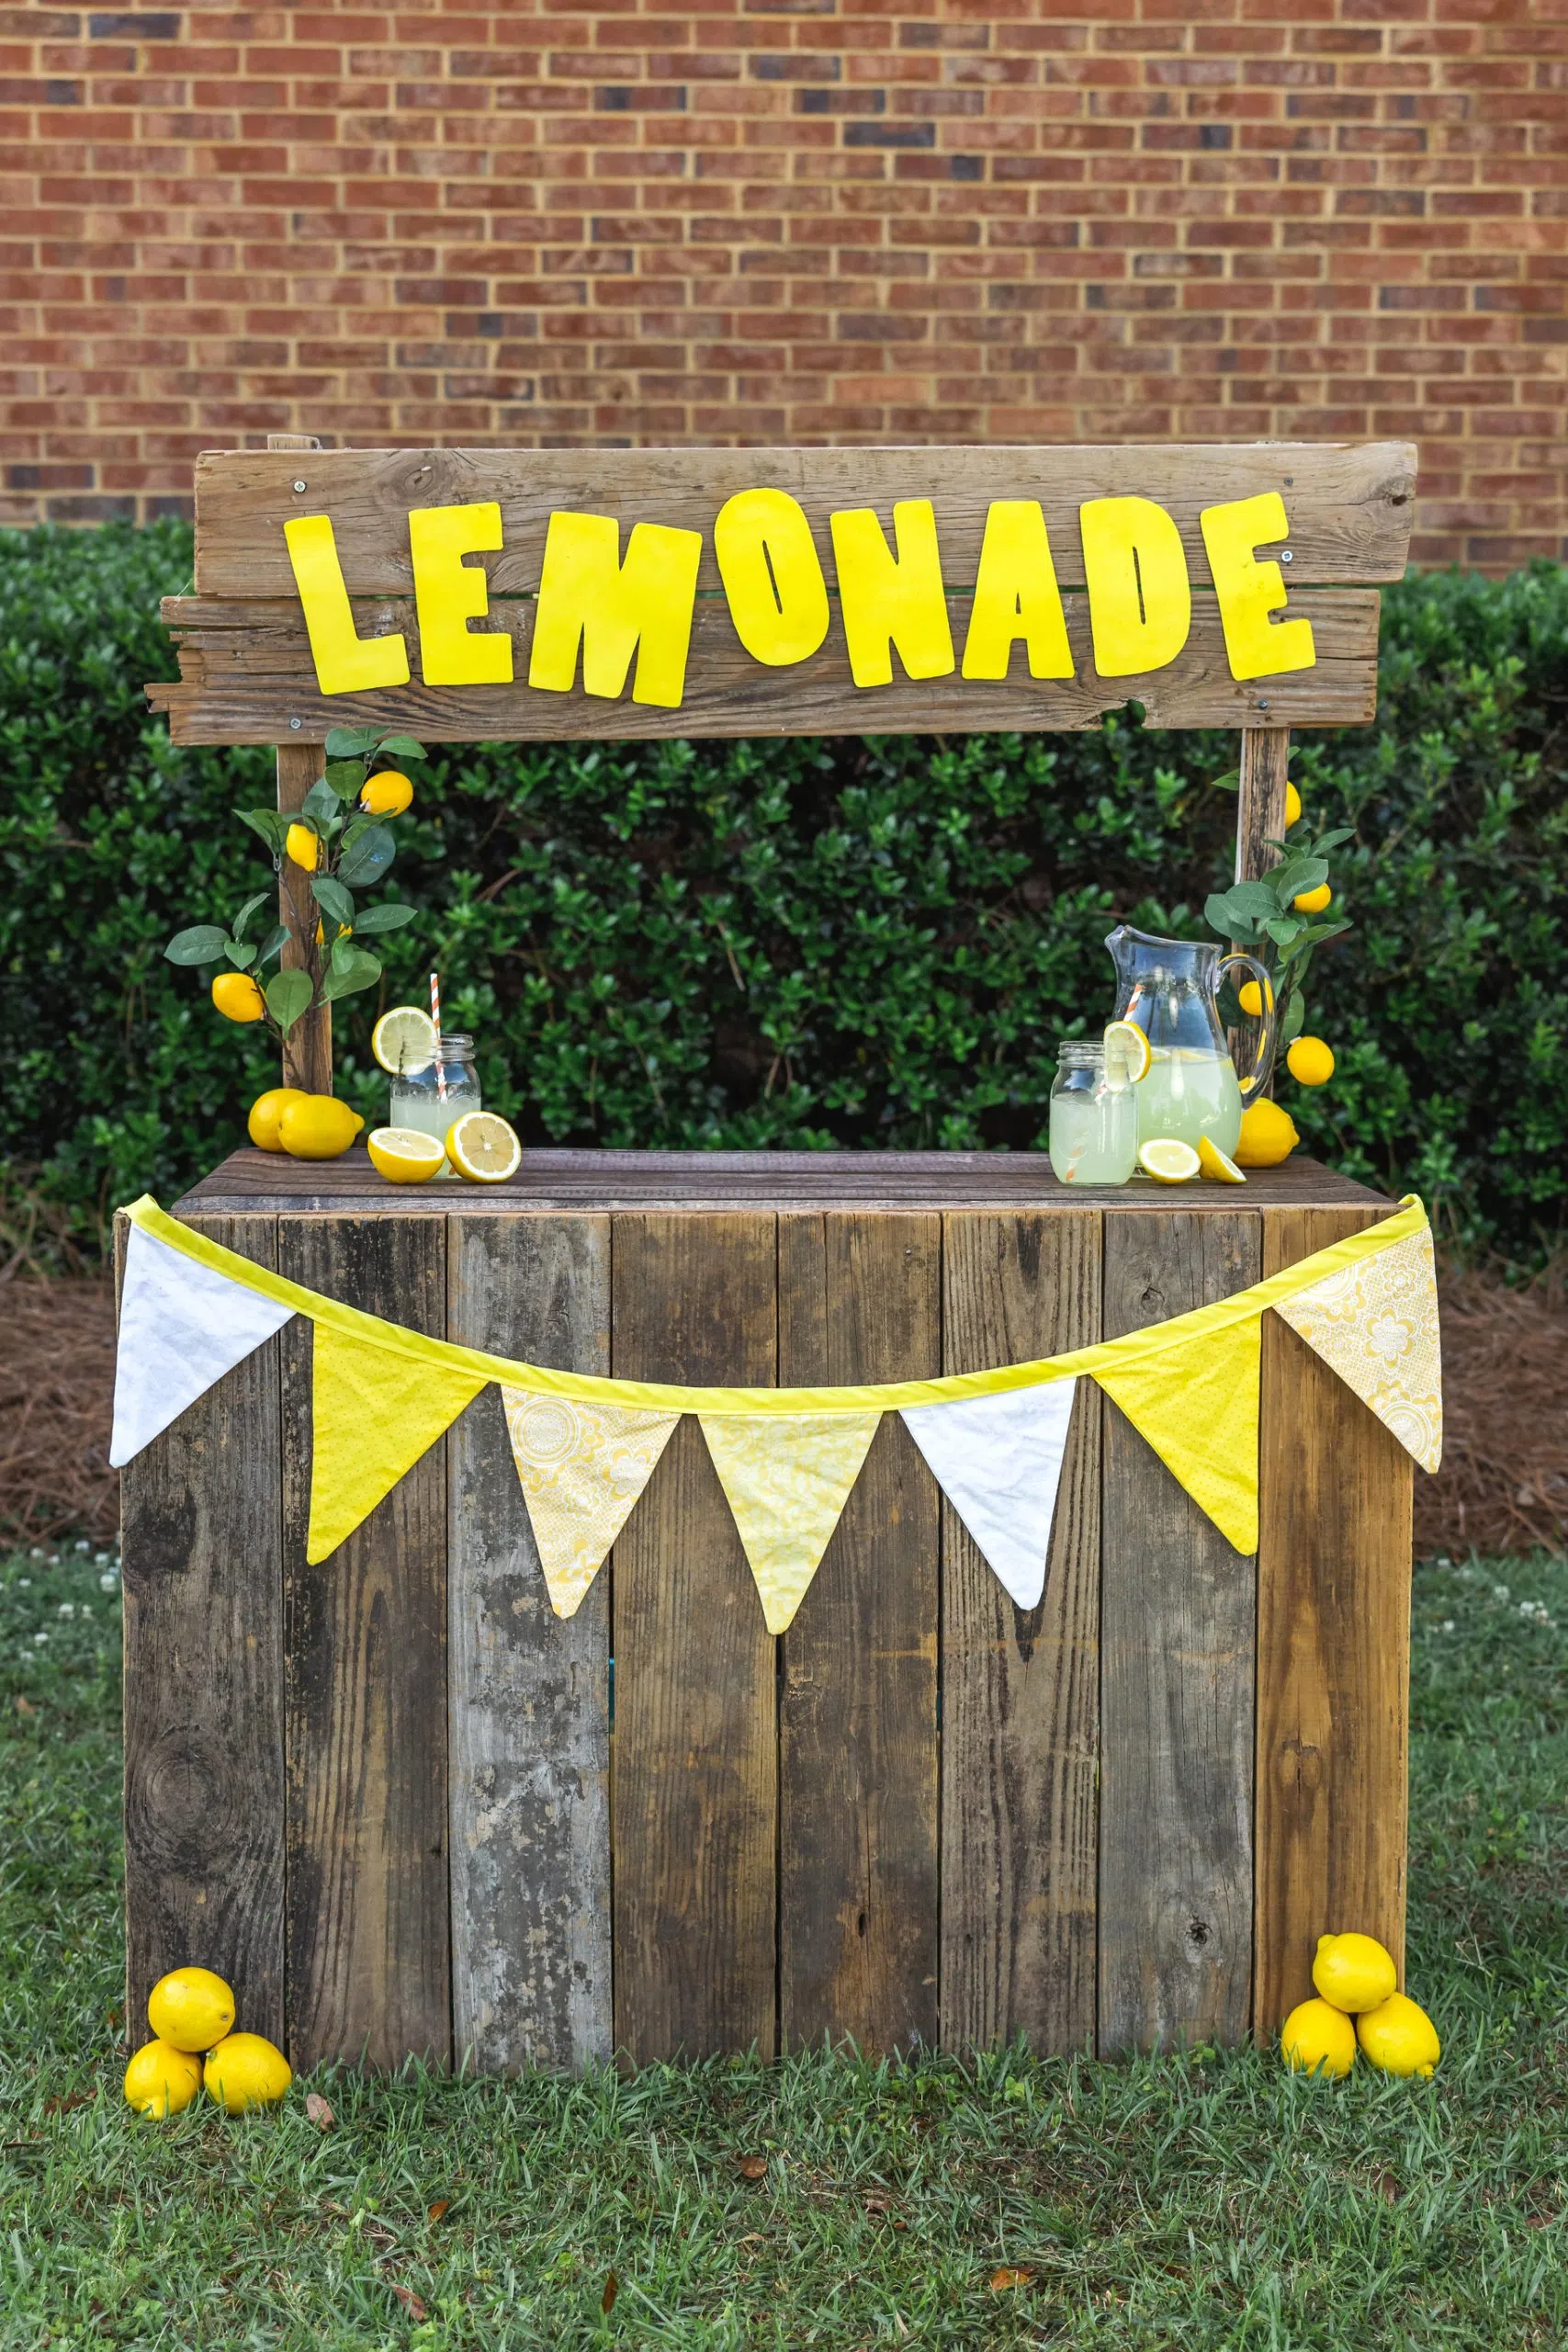 Lemonade Day goes this Saturday